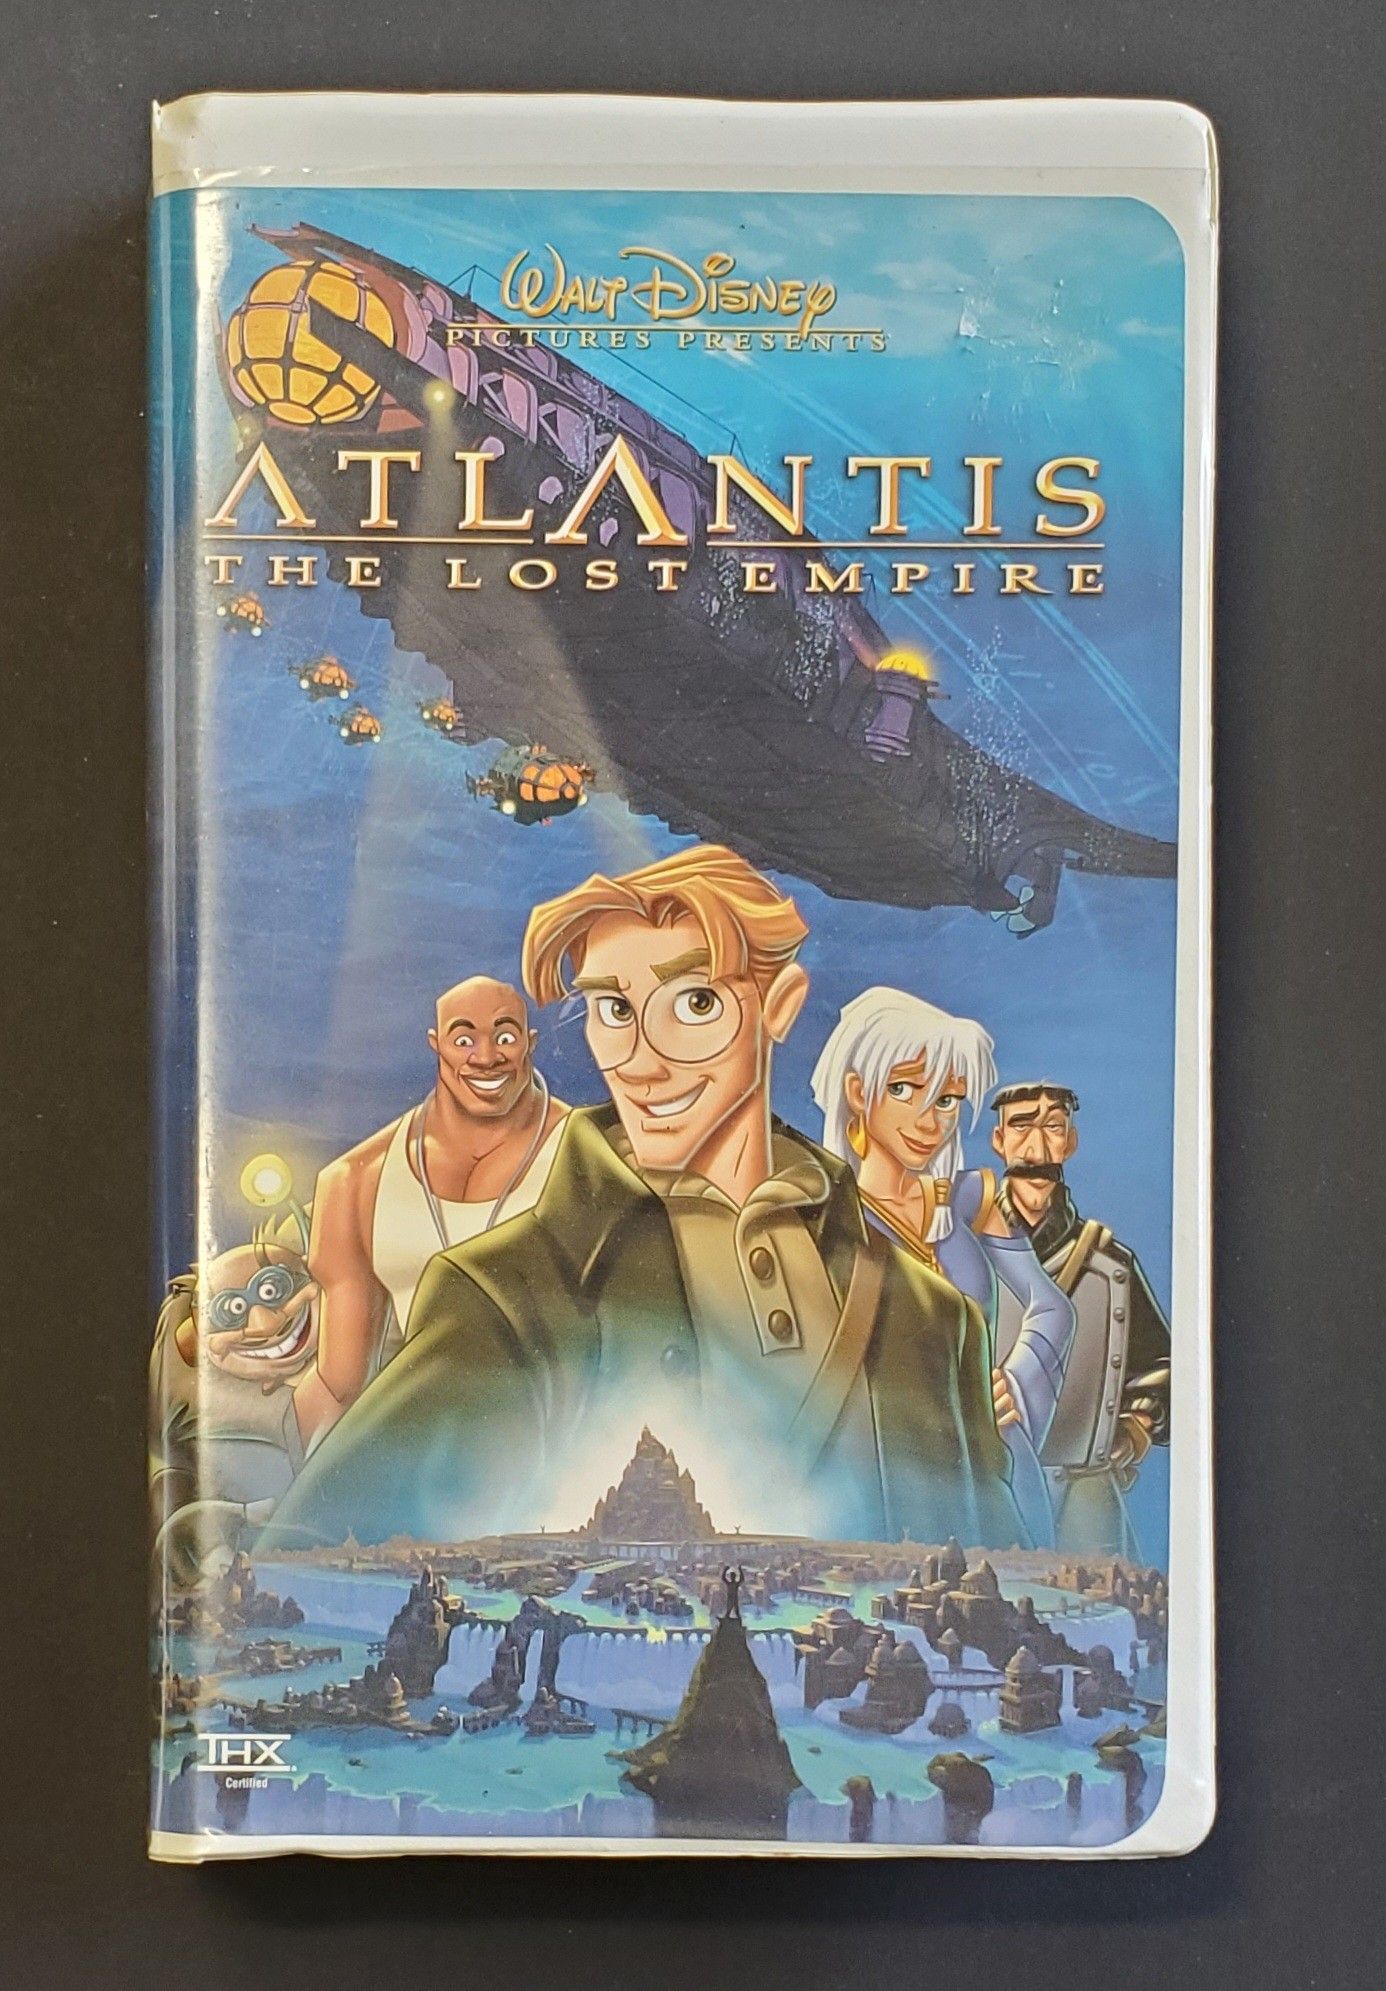 Disney Atlantis - Lost Empire VHS